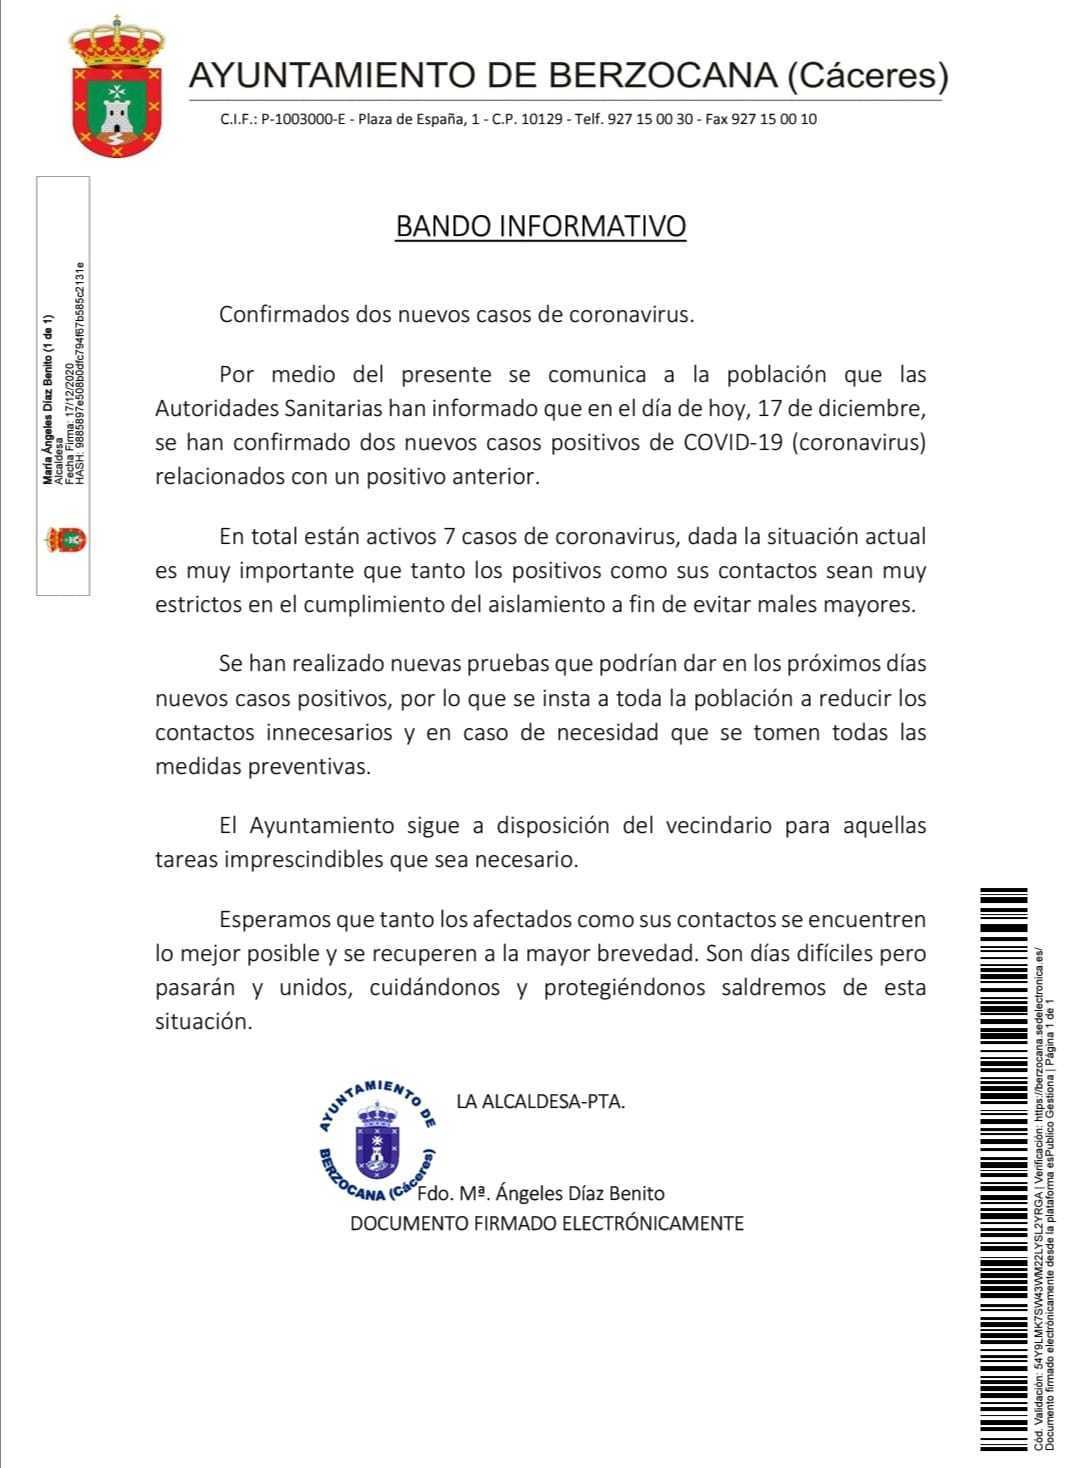 9 casos positivos activos de COVID-19 (diciembre 2020) - Berzocana (Cáceres) 1